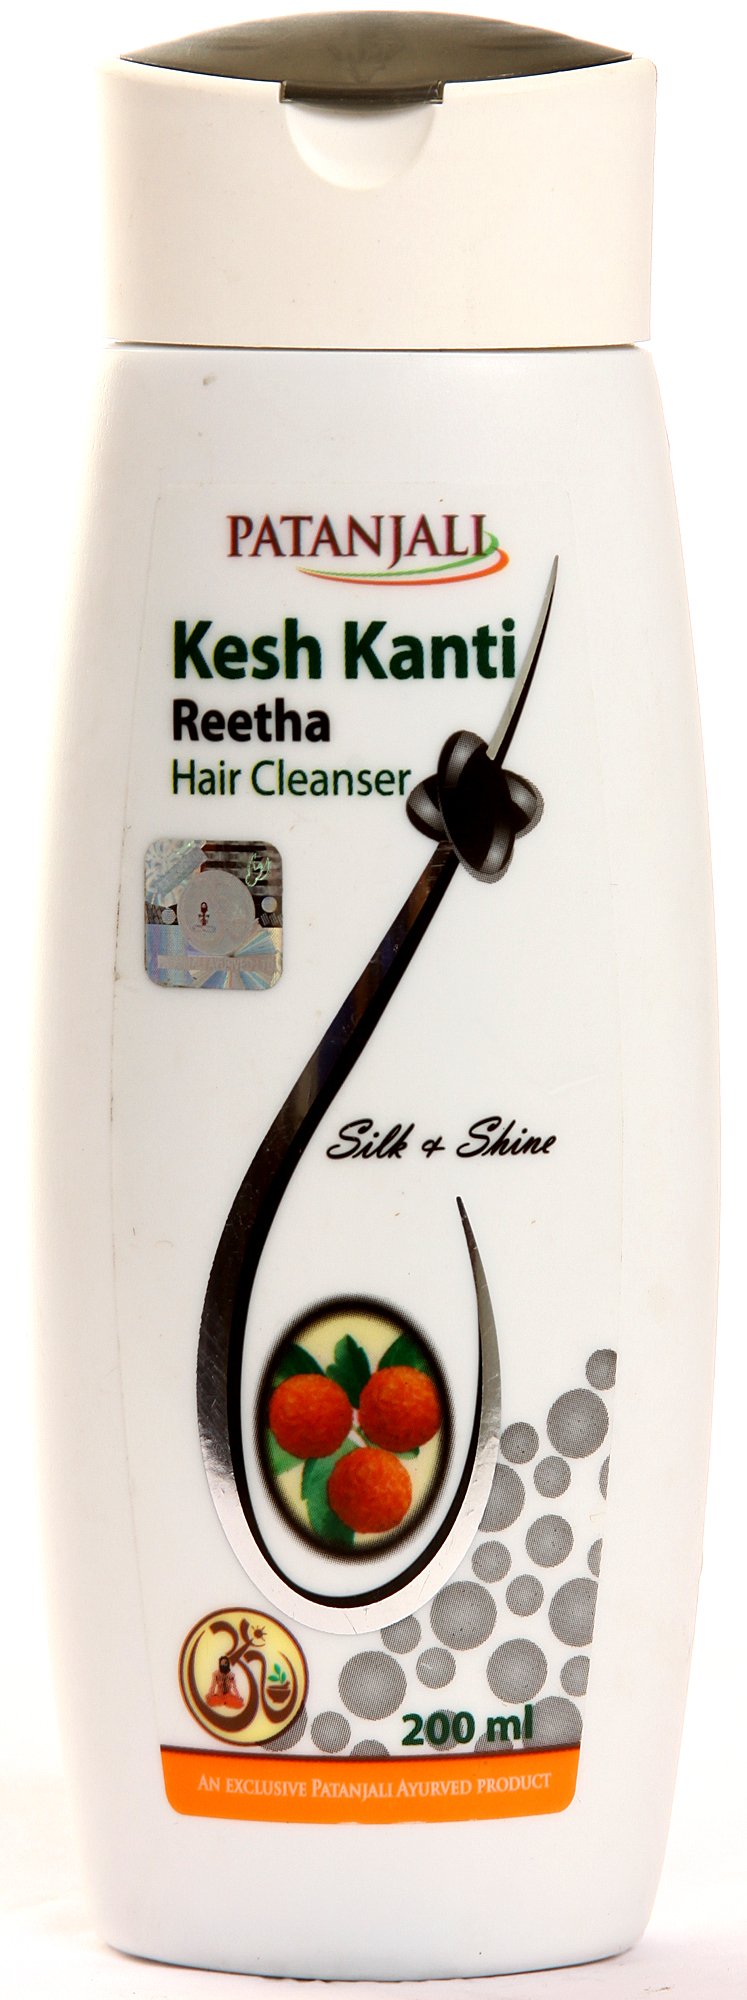 Patanjali Kesh Kanti Reetha Hair Cleanser - book cover